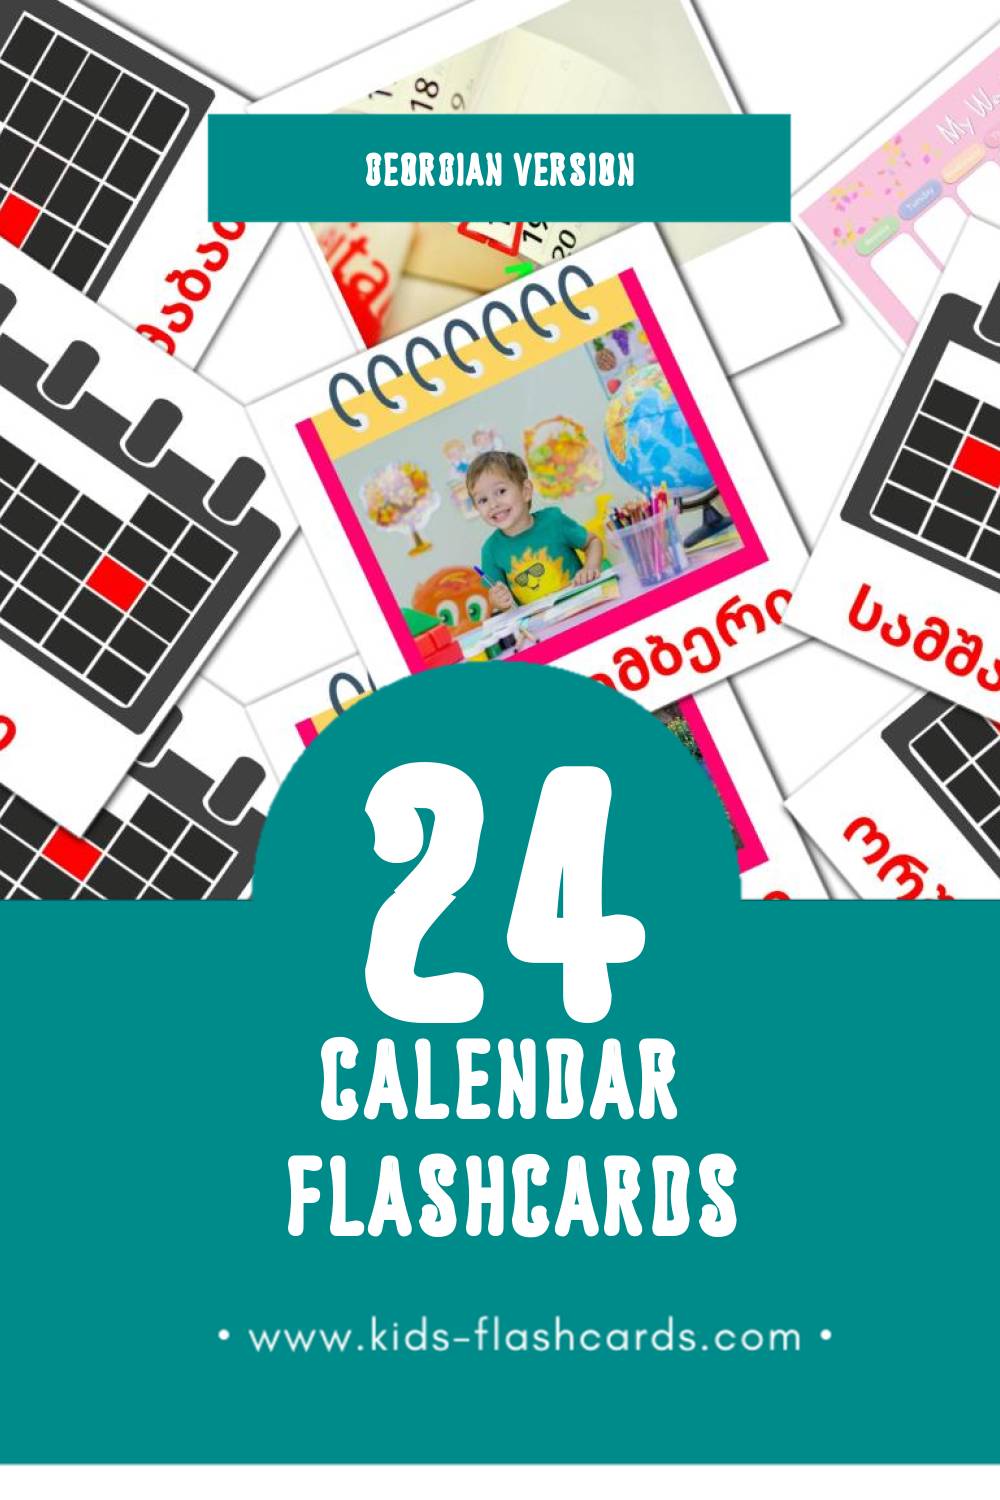 Visual კალენდარი - Kalendar Flashcards for Toddlers (24 cards in Georgian)